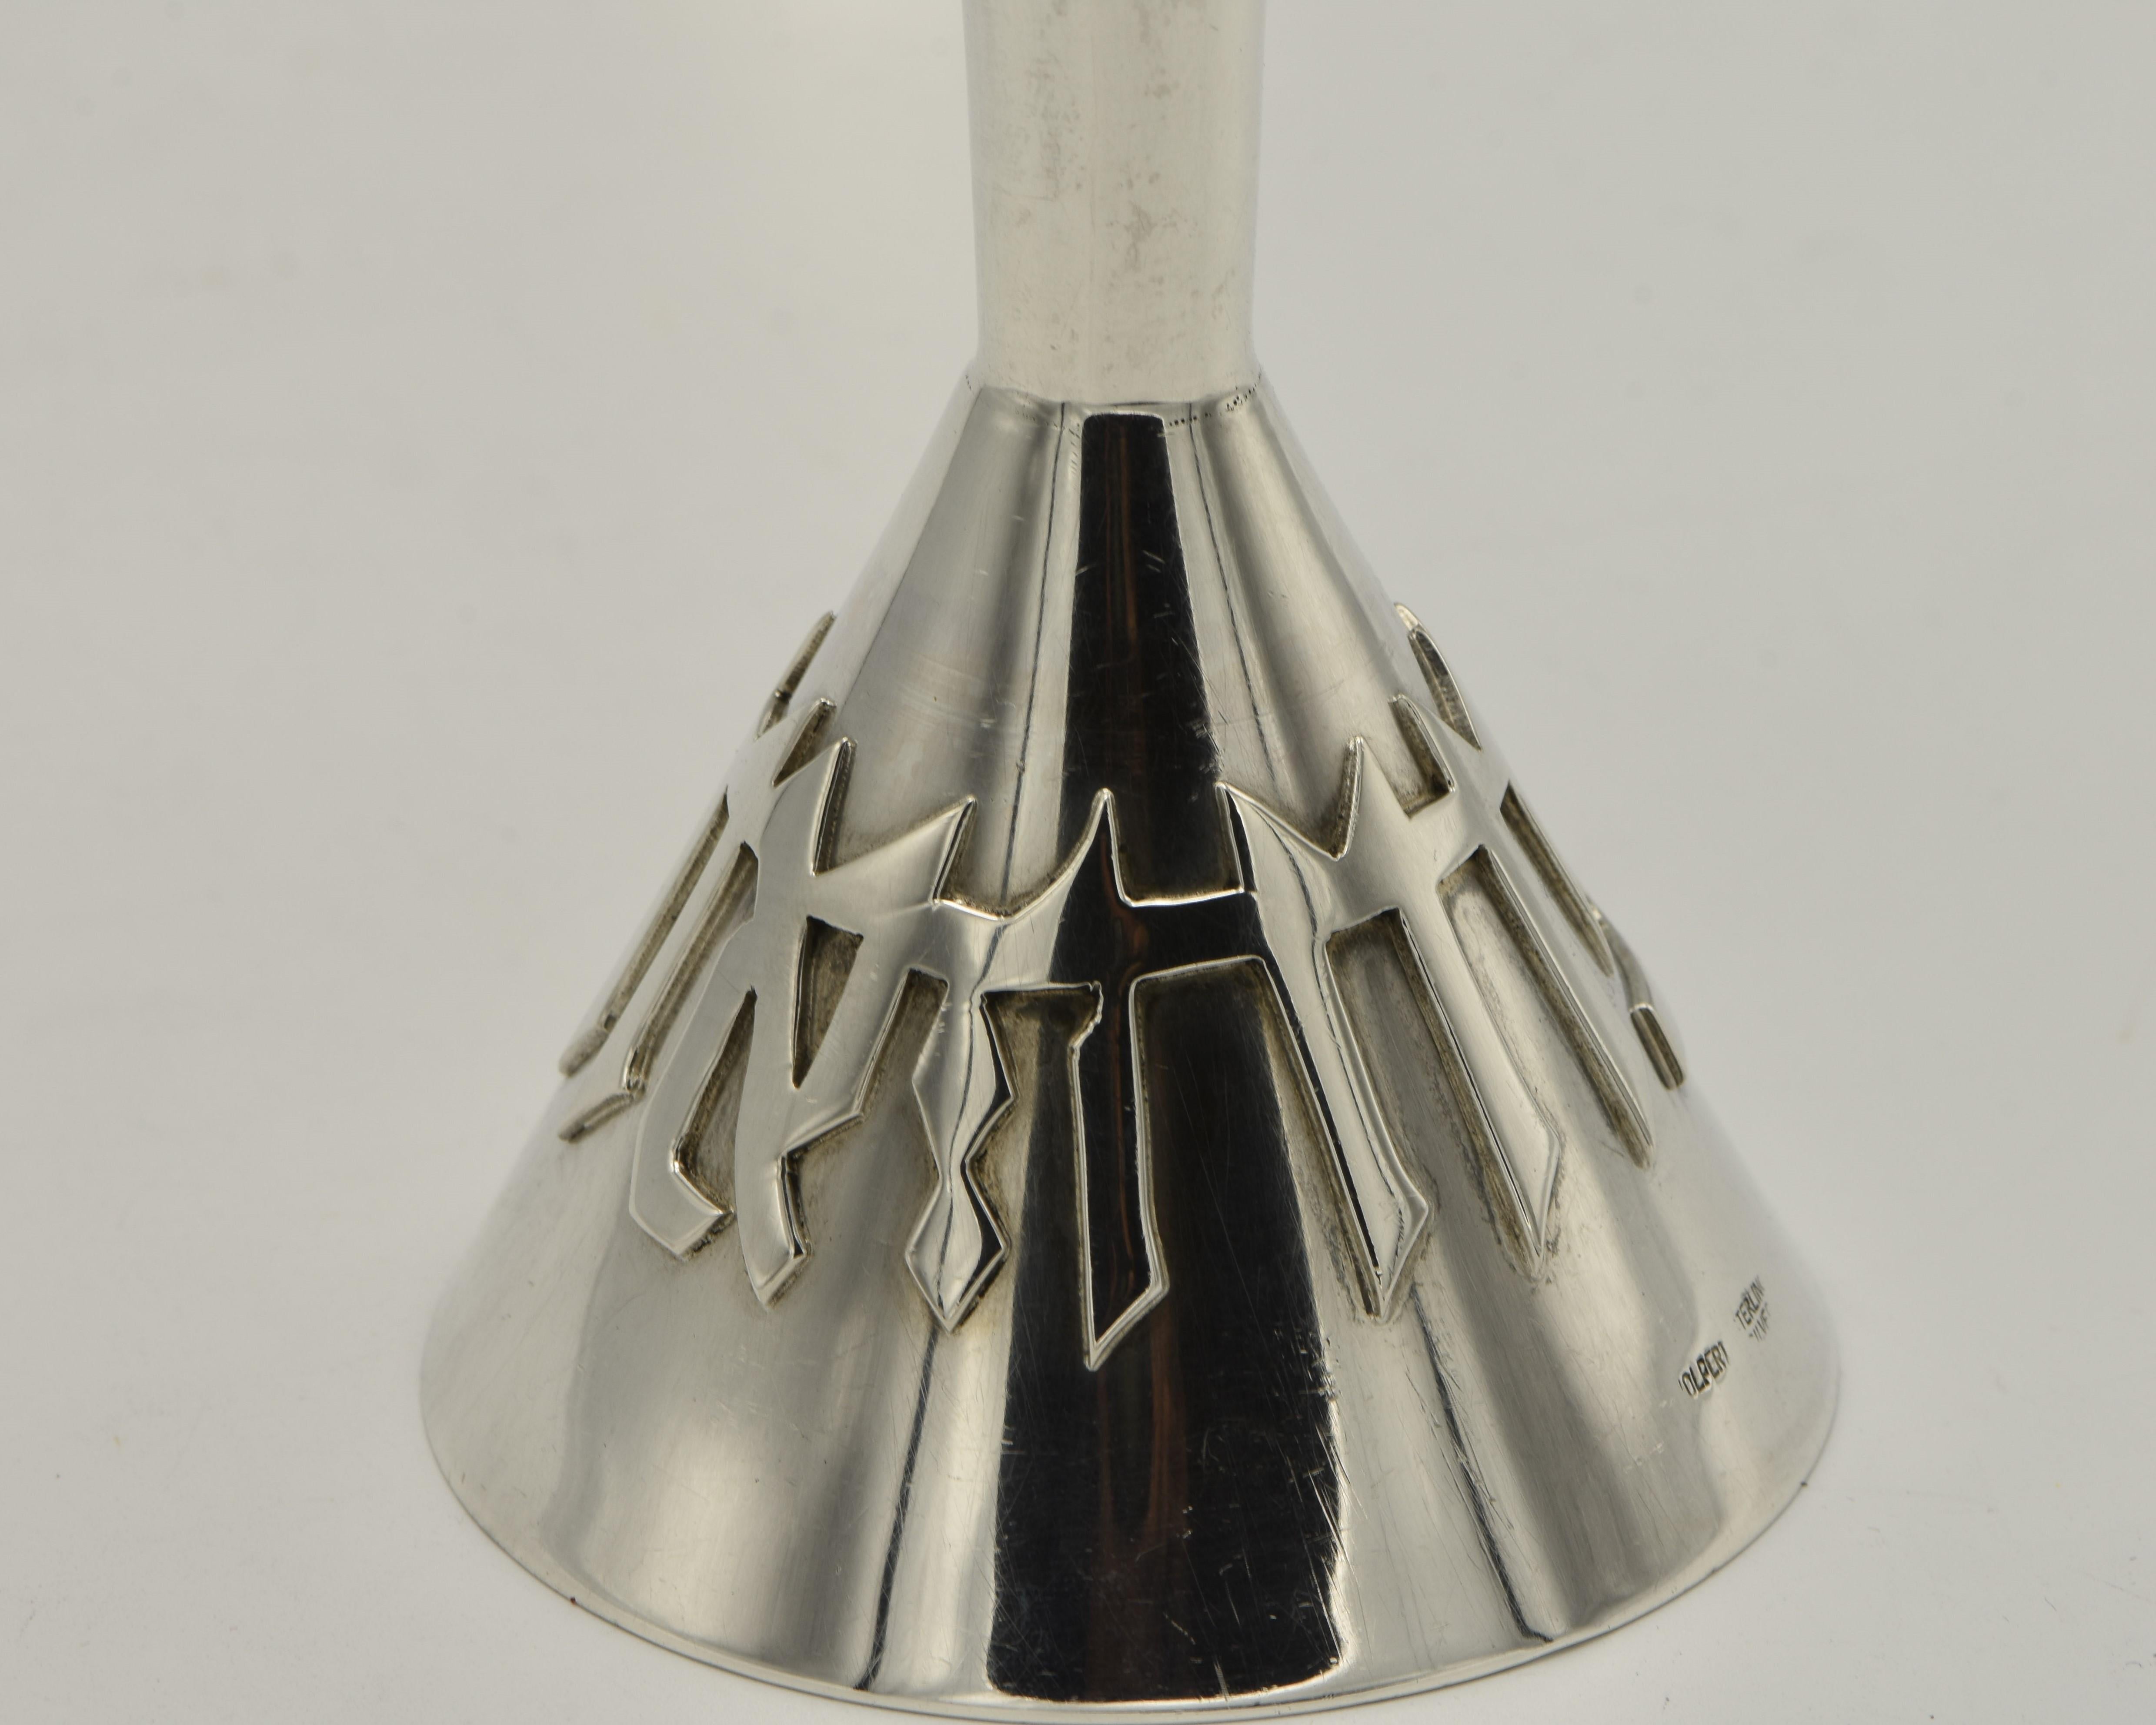 American Mid-20th Century Modernist Silver Shabbat Candlesticks by Ludwig Wolpert